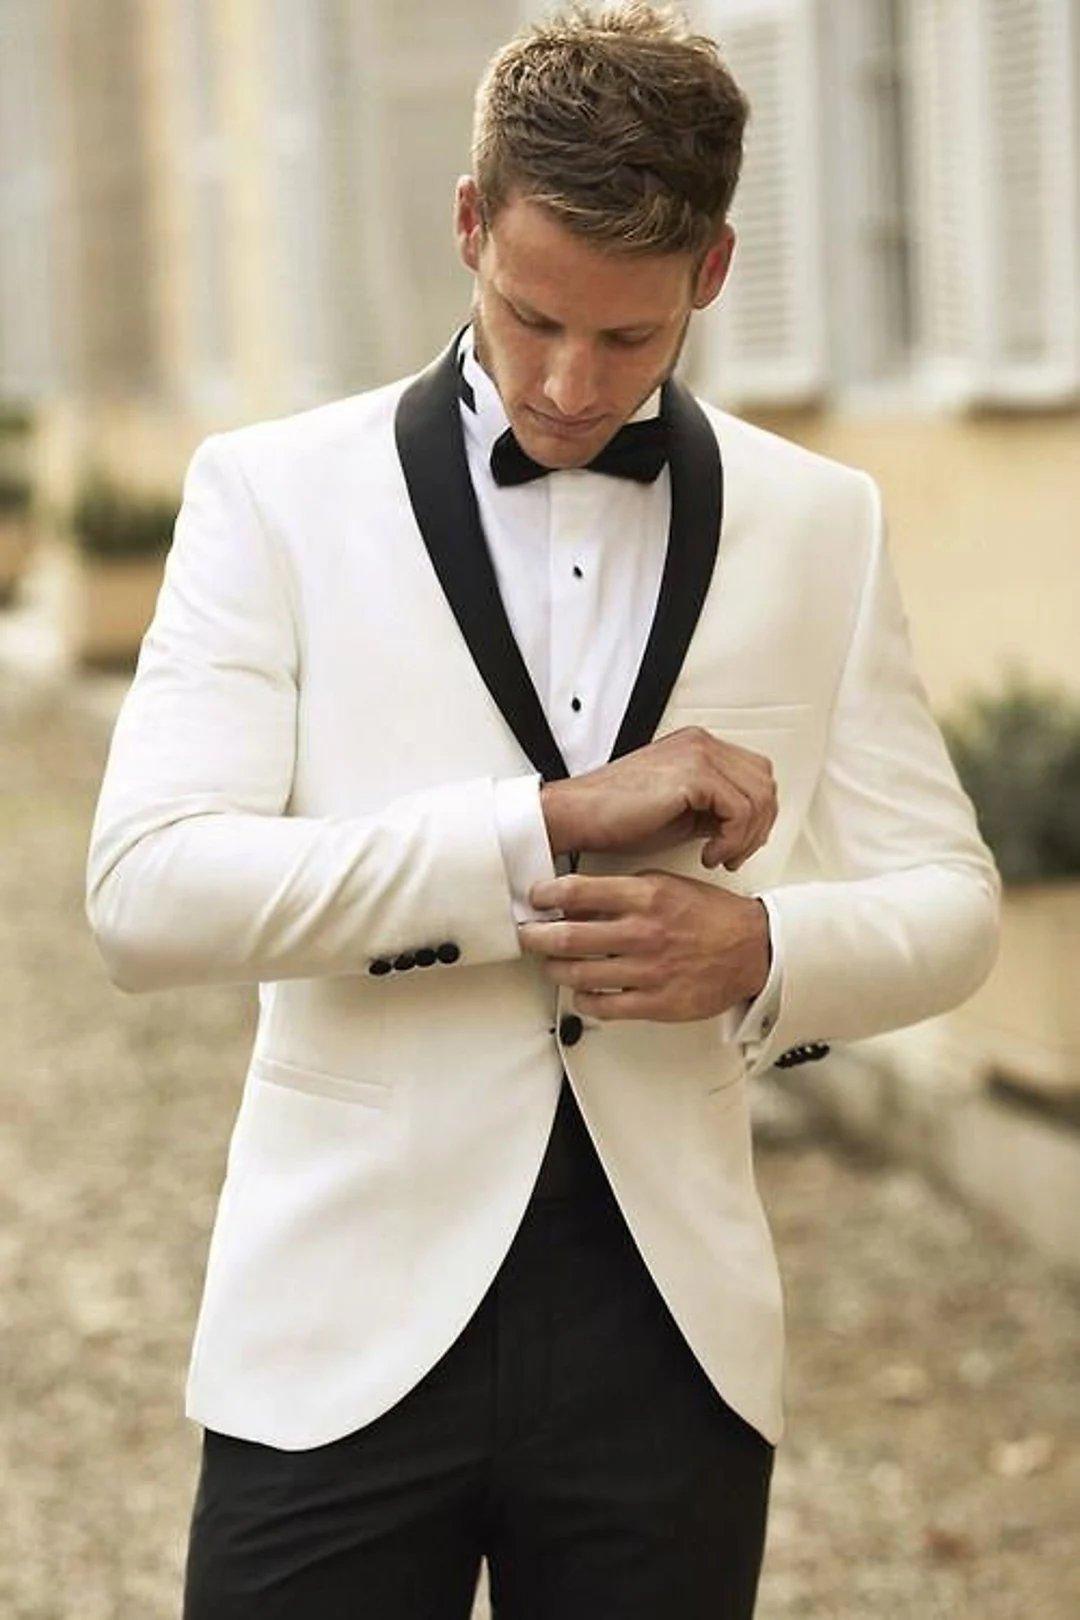 Elegant Wedding Suits for Men - Shop Now!